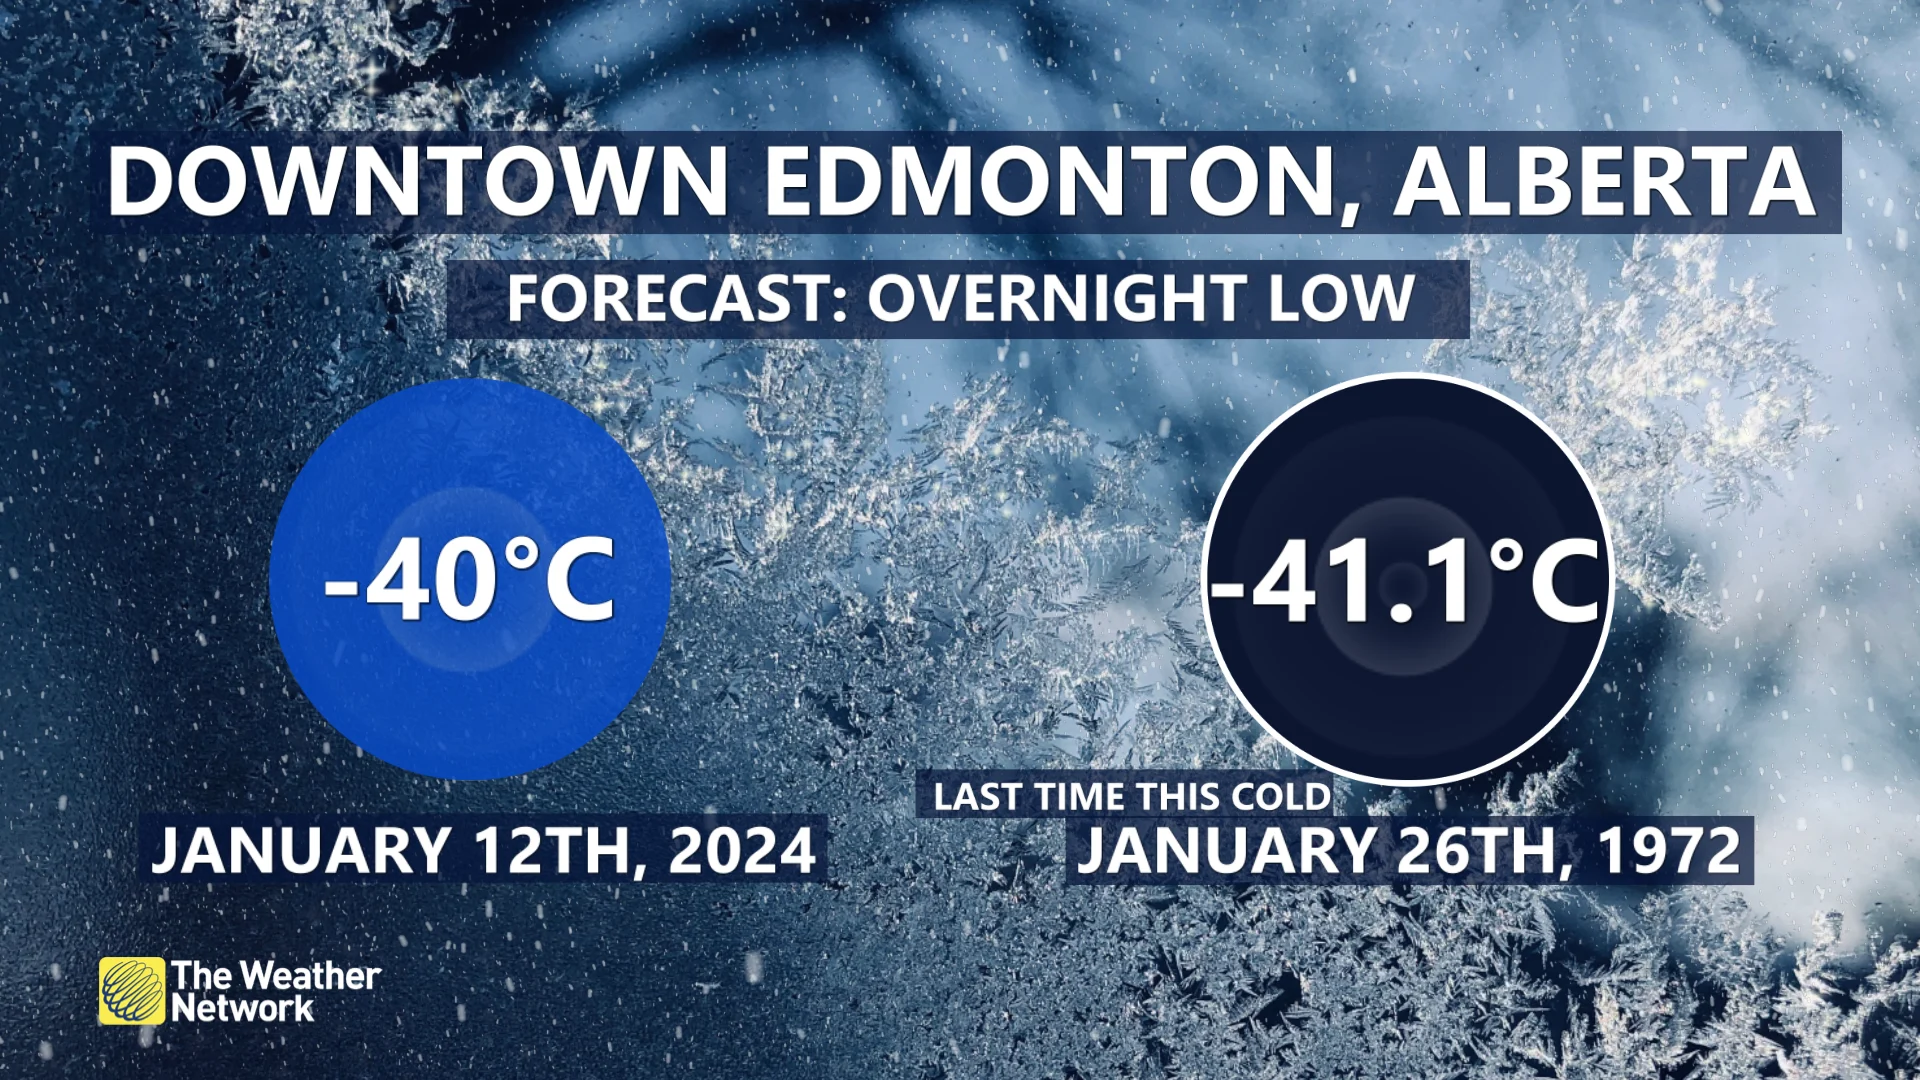 Baron - Edmonton overnight forecast.jpg